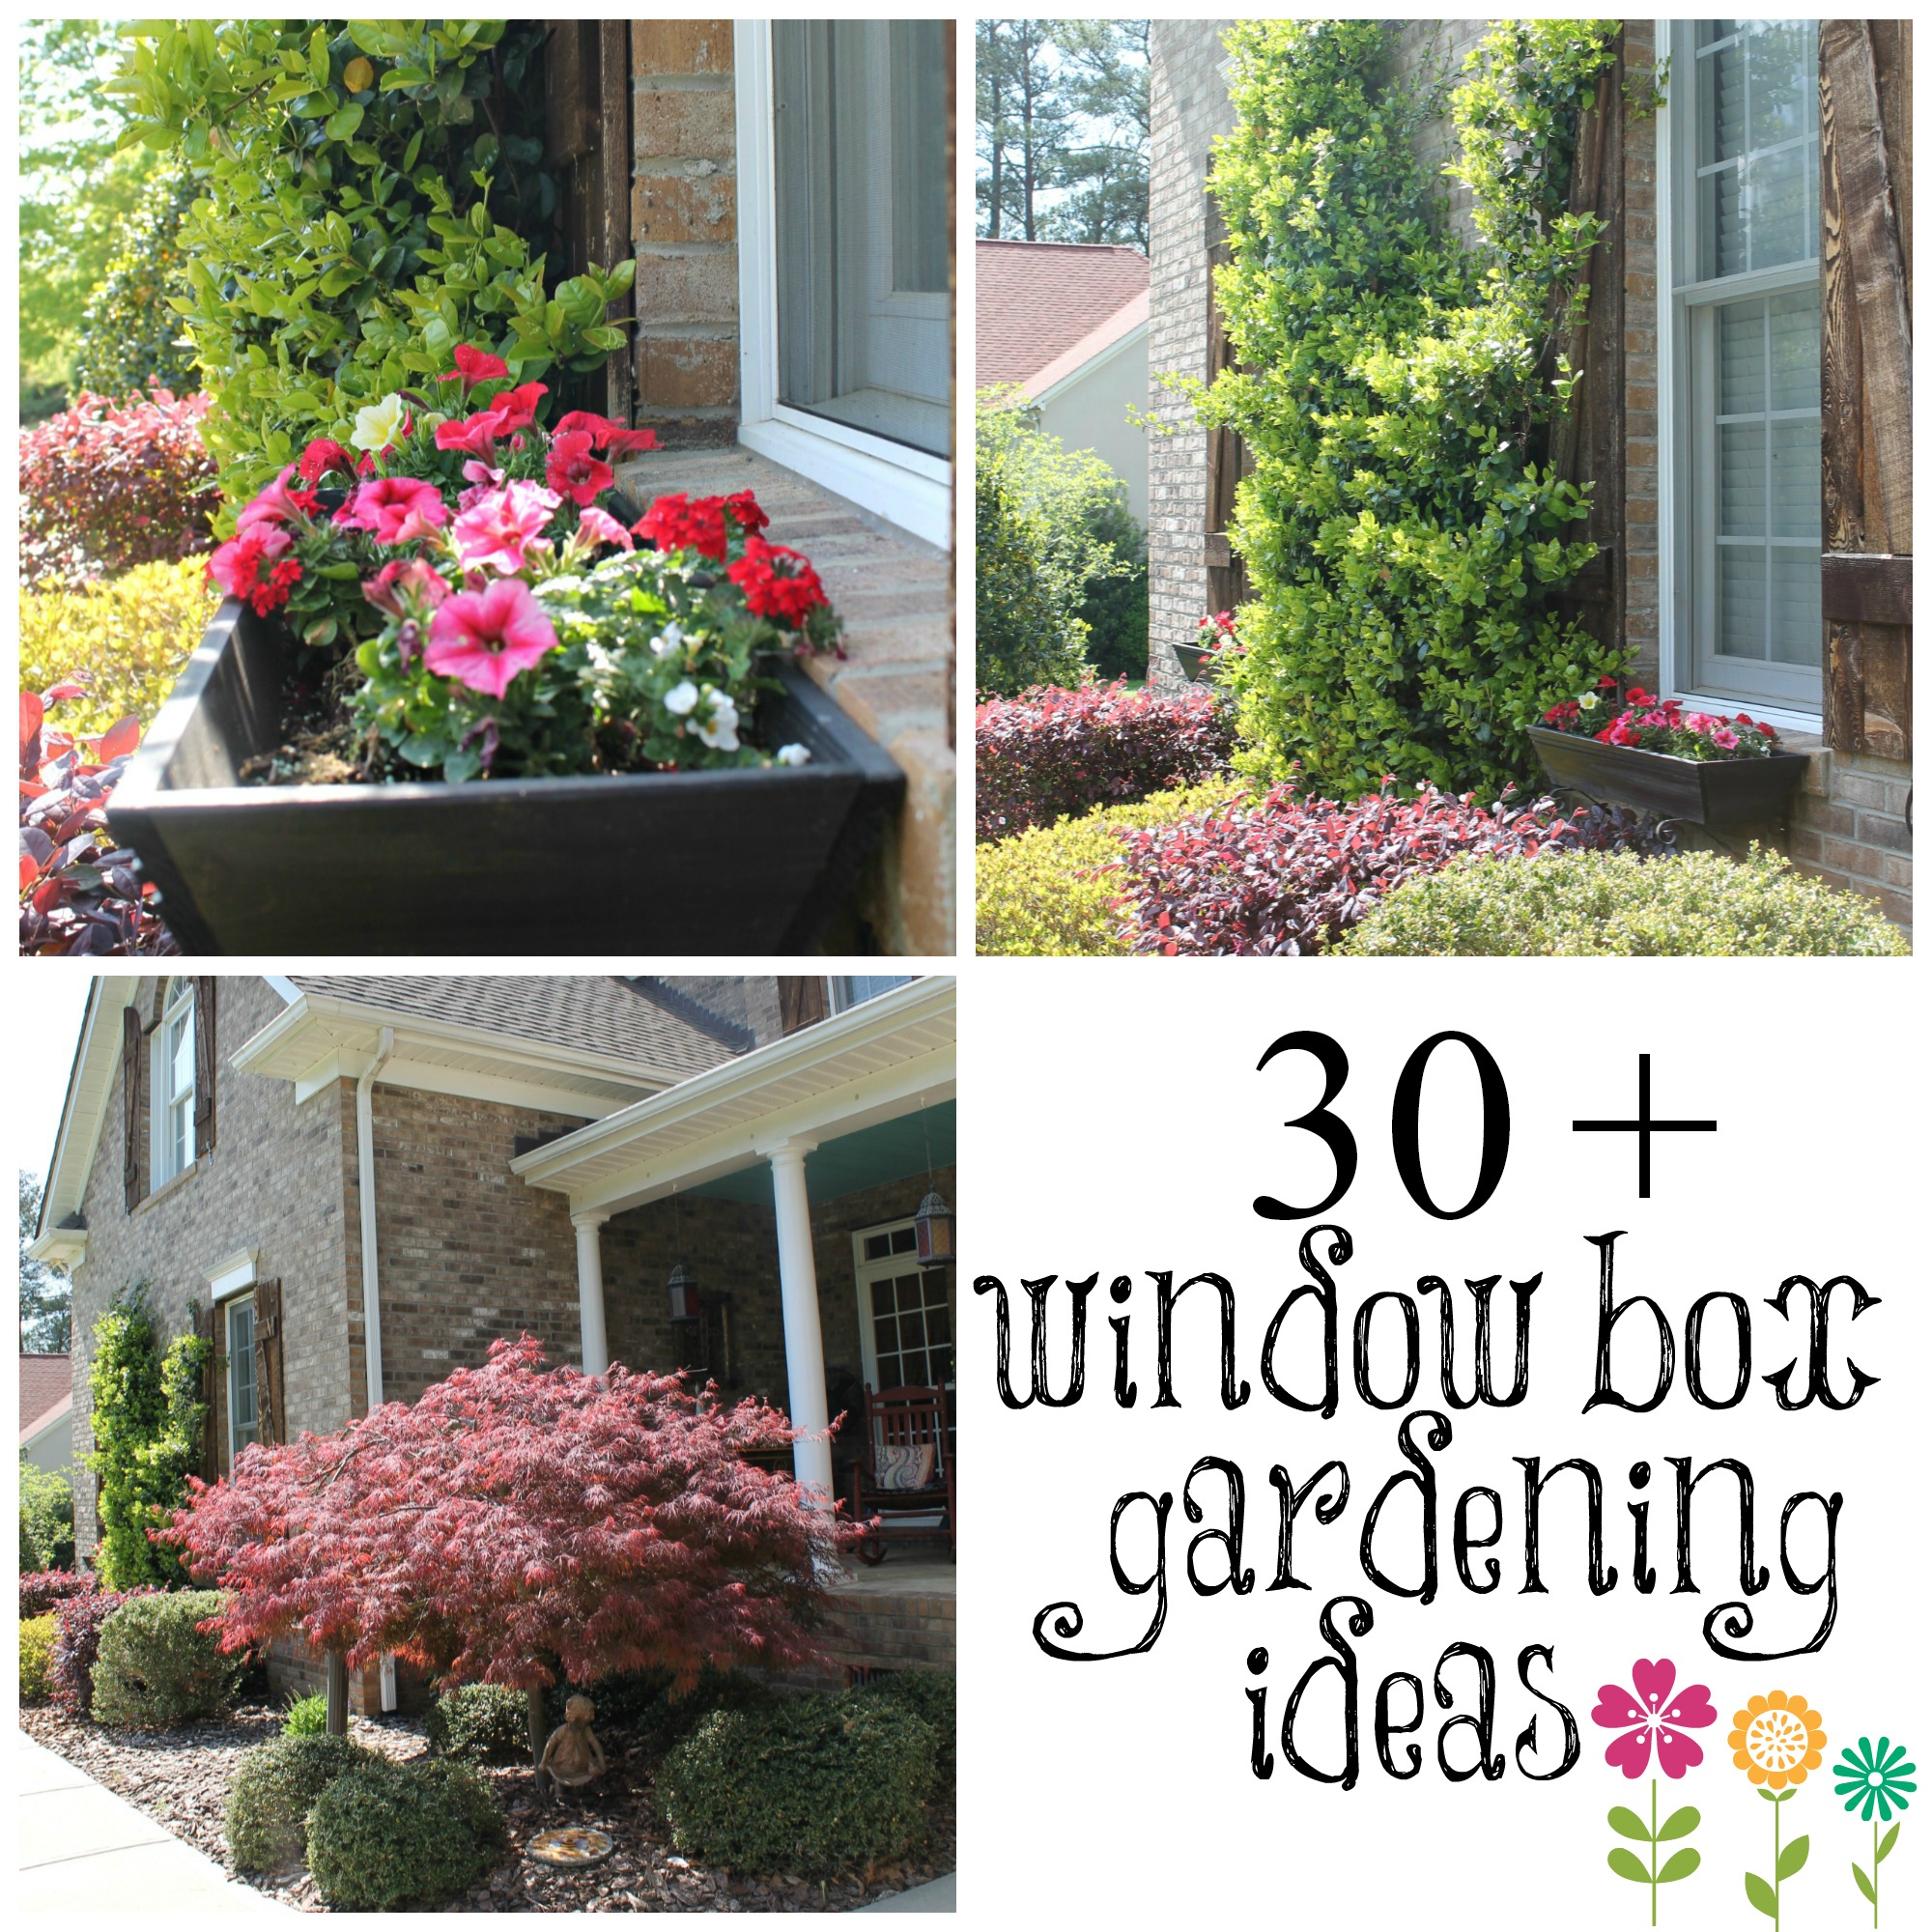 30 + window box gardening ideas